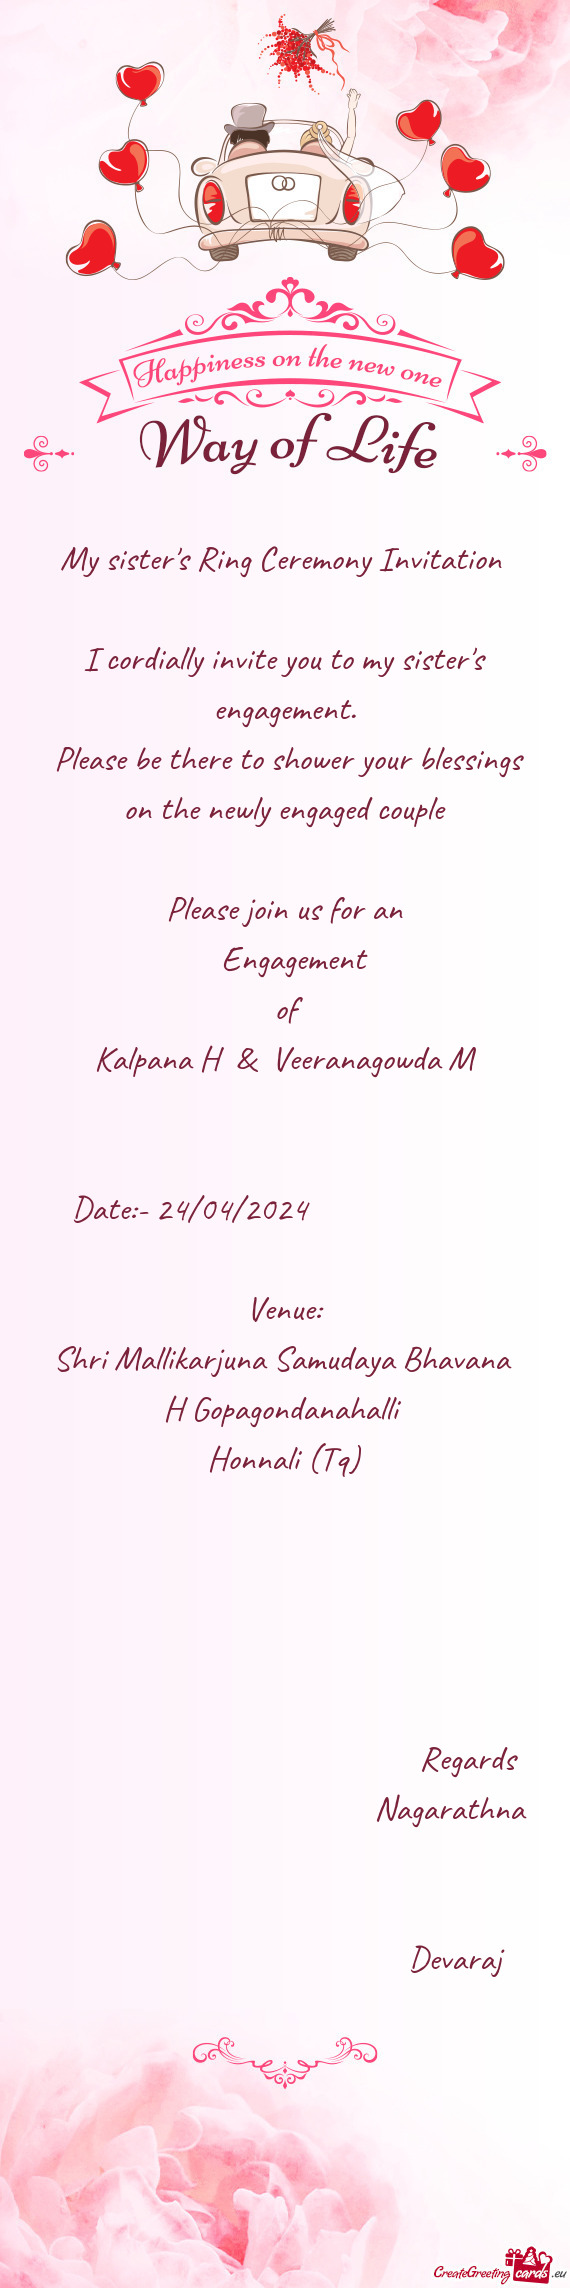 Engagement of Kalpana H & Veeranagowda M  Date